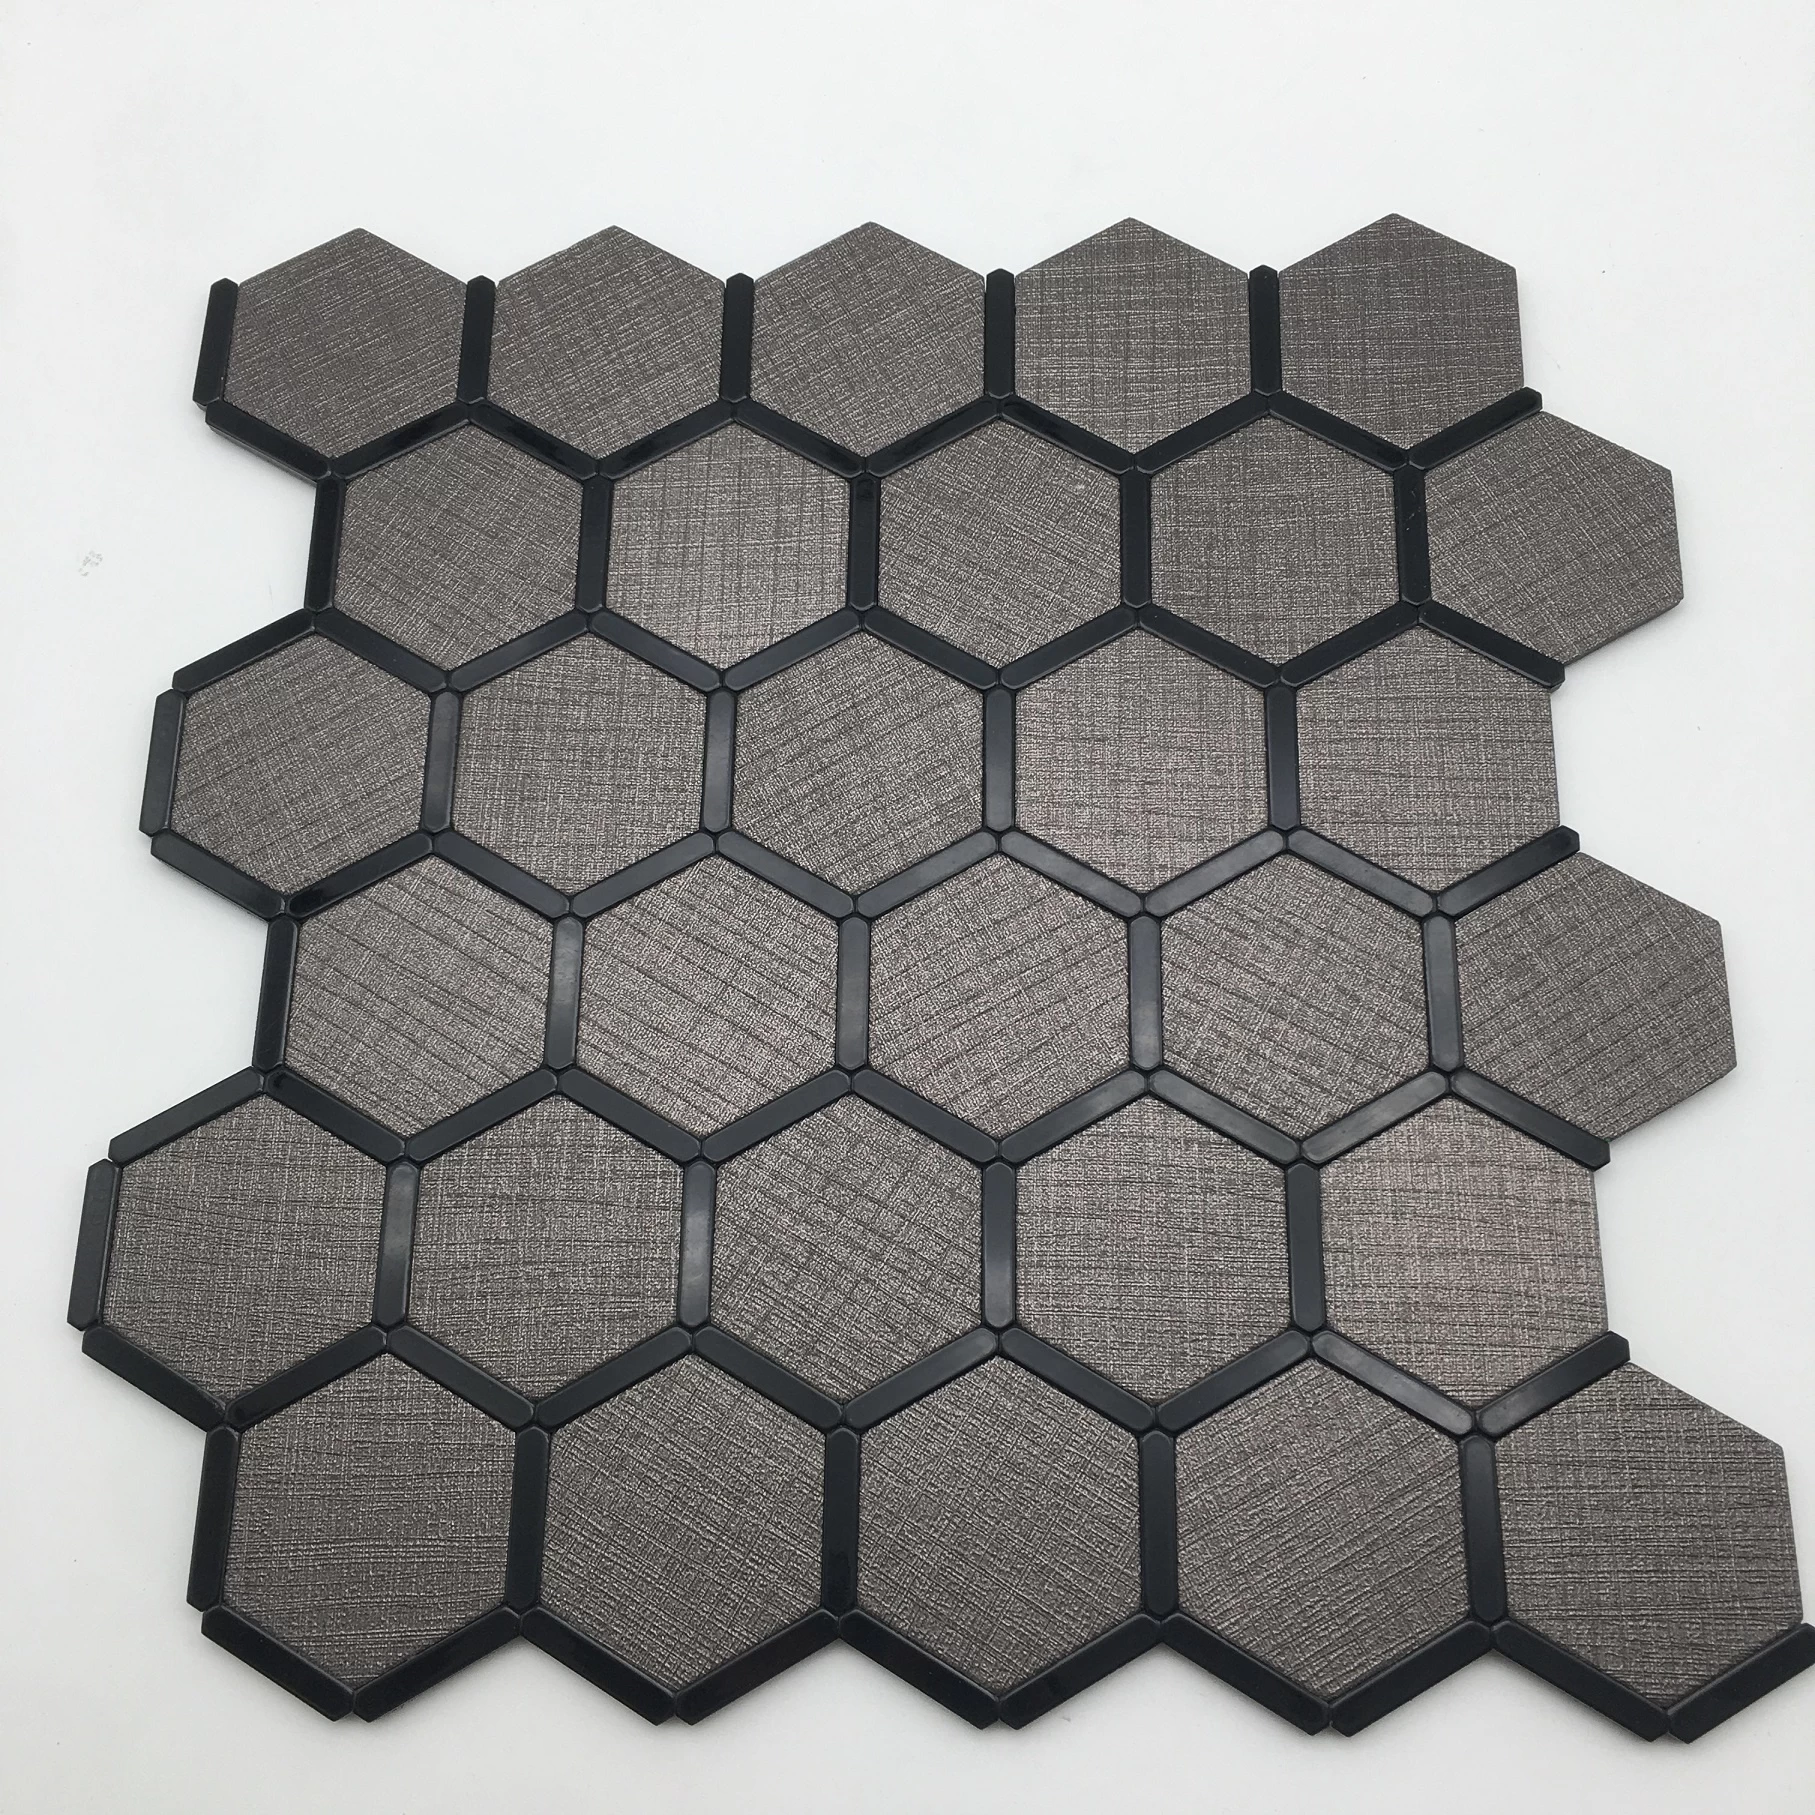 Aluminum Backsplash Tiles Metal Tile Peel and Stick Self Adhesive Wall Tile DIY Waterproof Home Decor